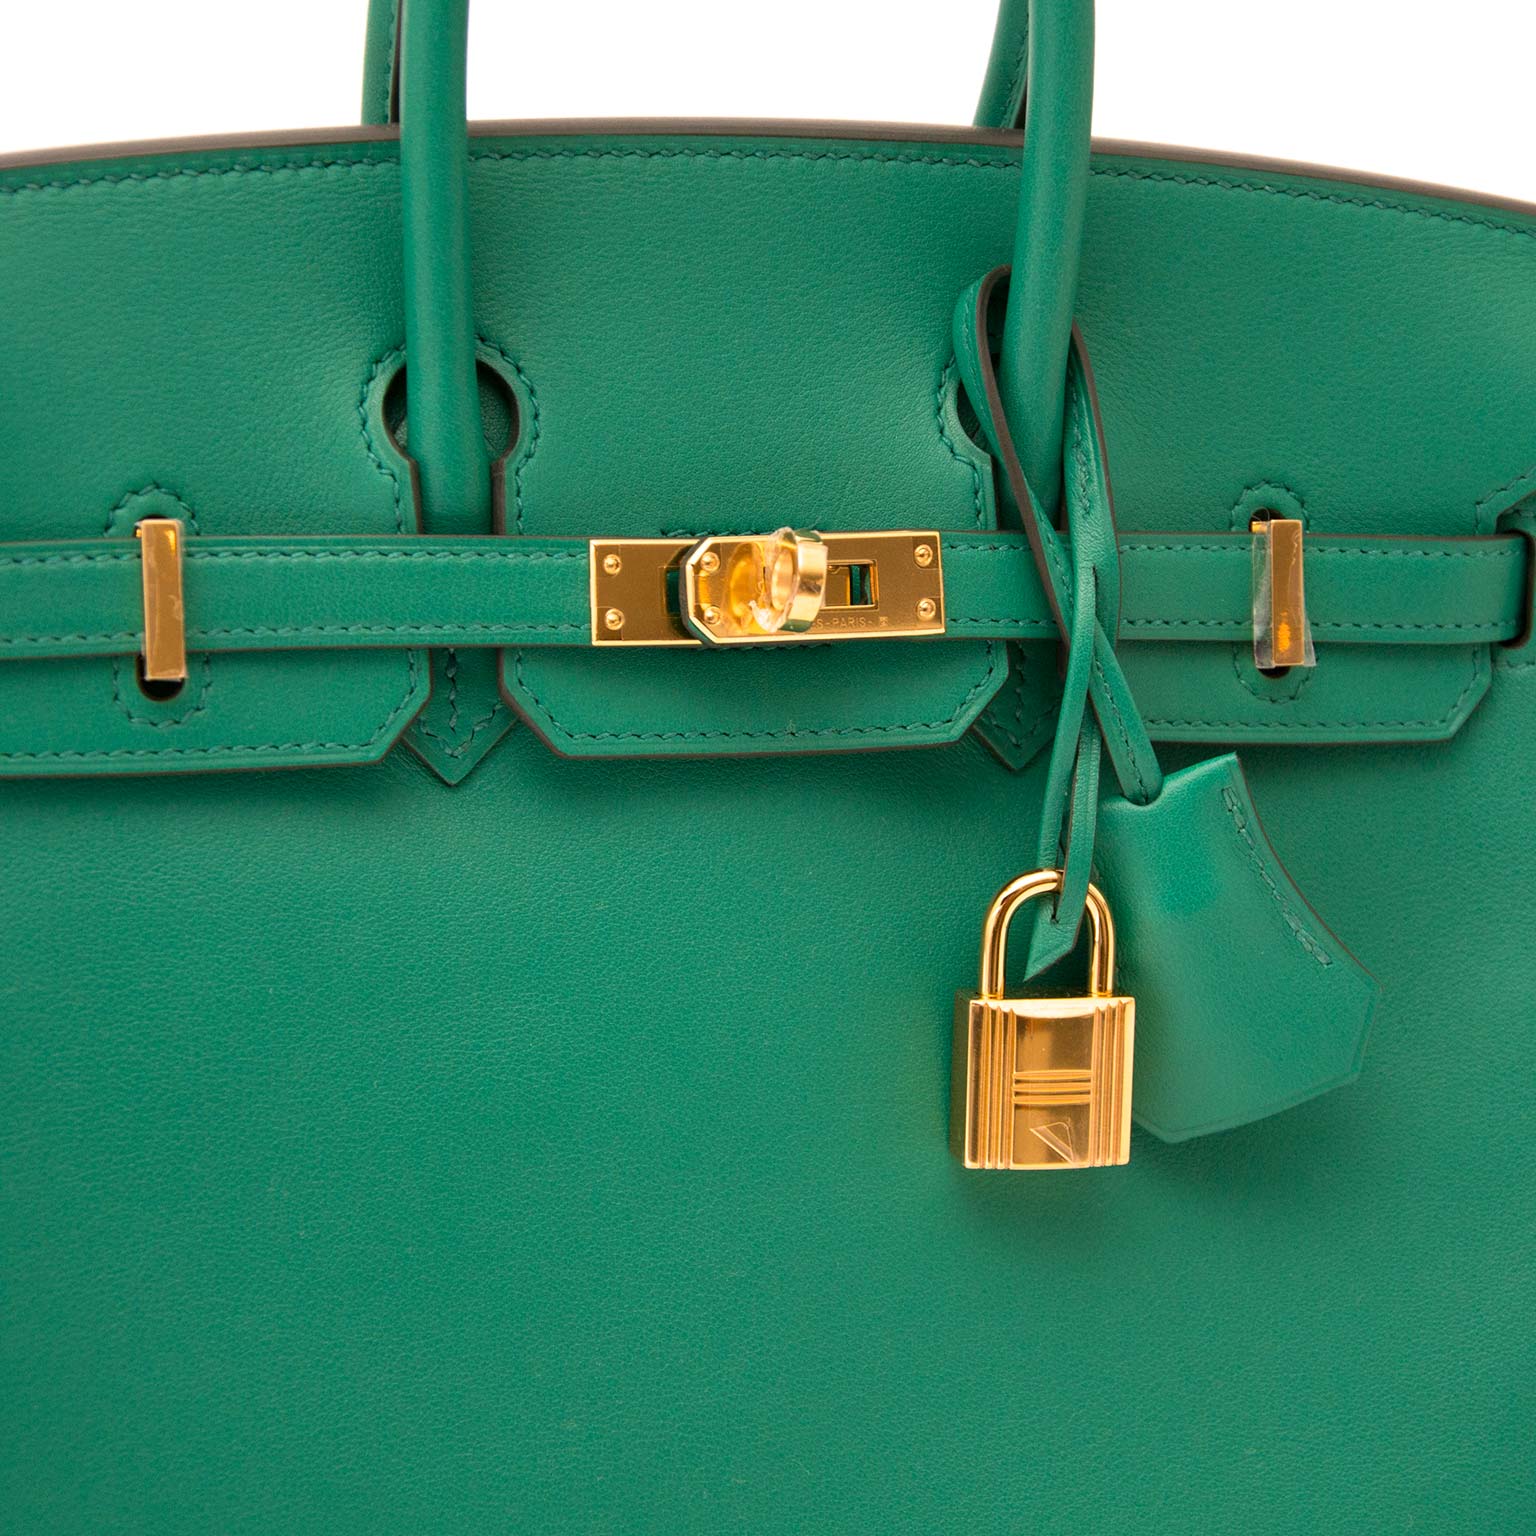 Hermes Birkin 25 Bag Vert Vertigo Emerald Tone Swift Gold Hardware